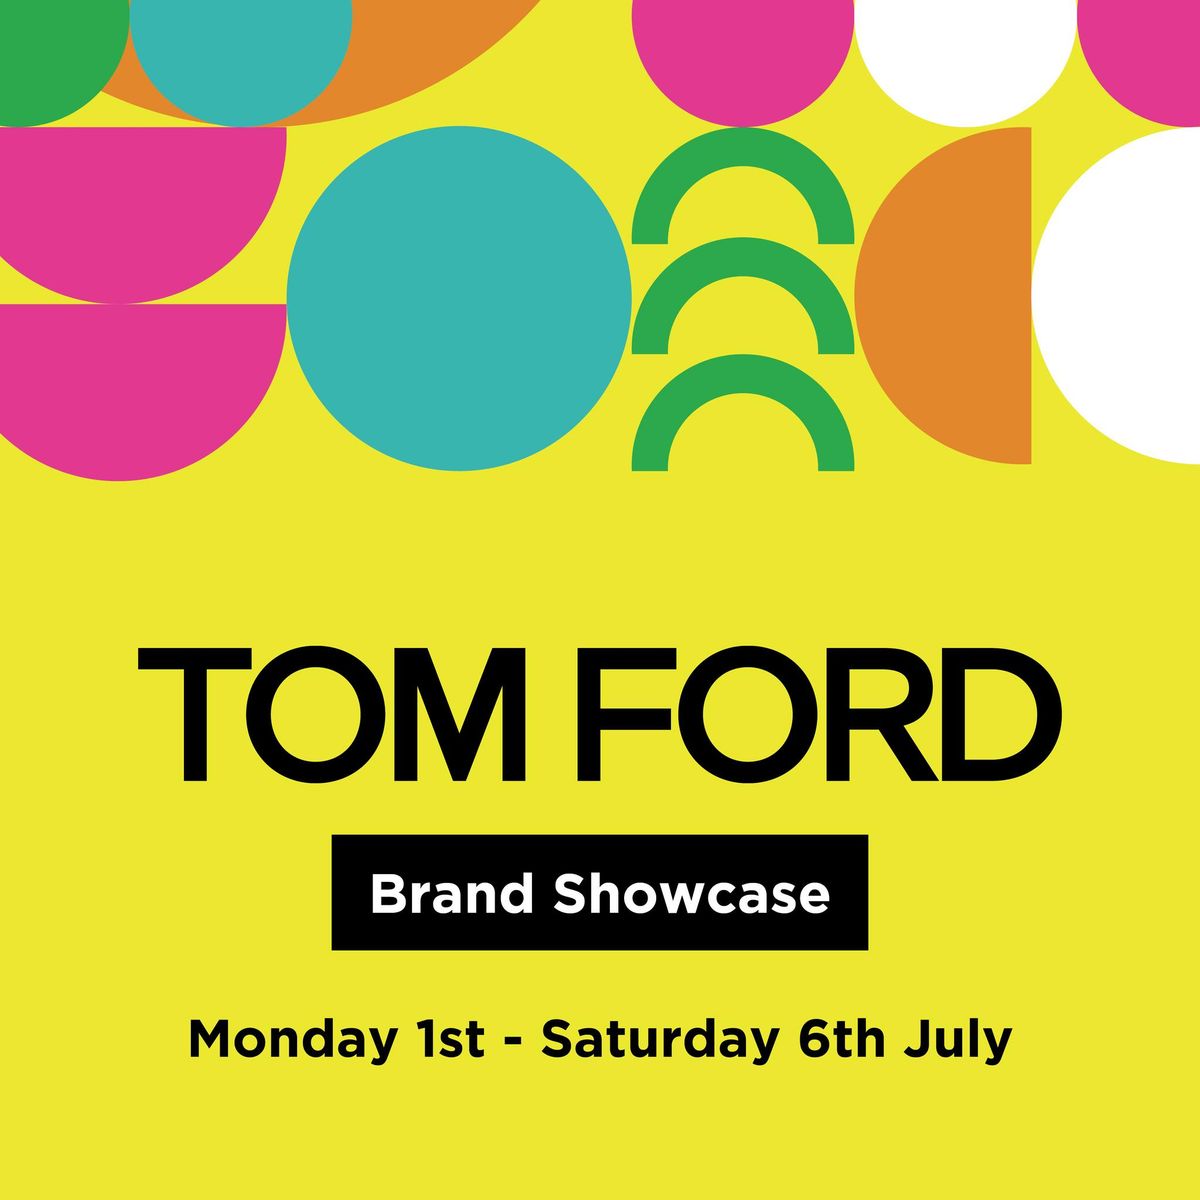 Tom Ford Brand Showcase